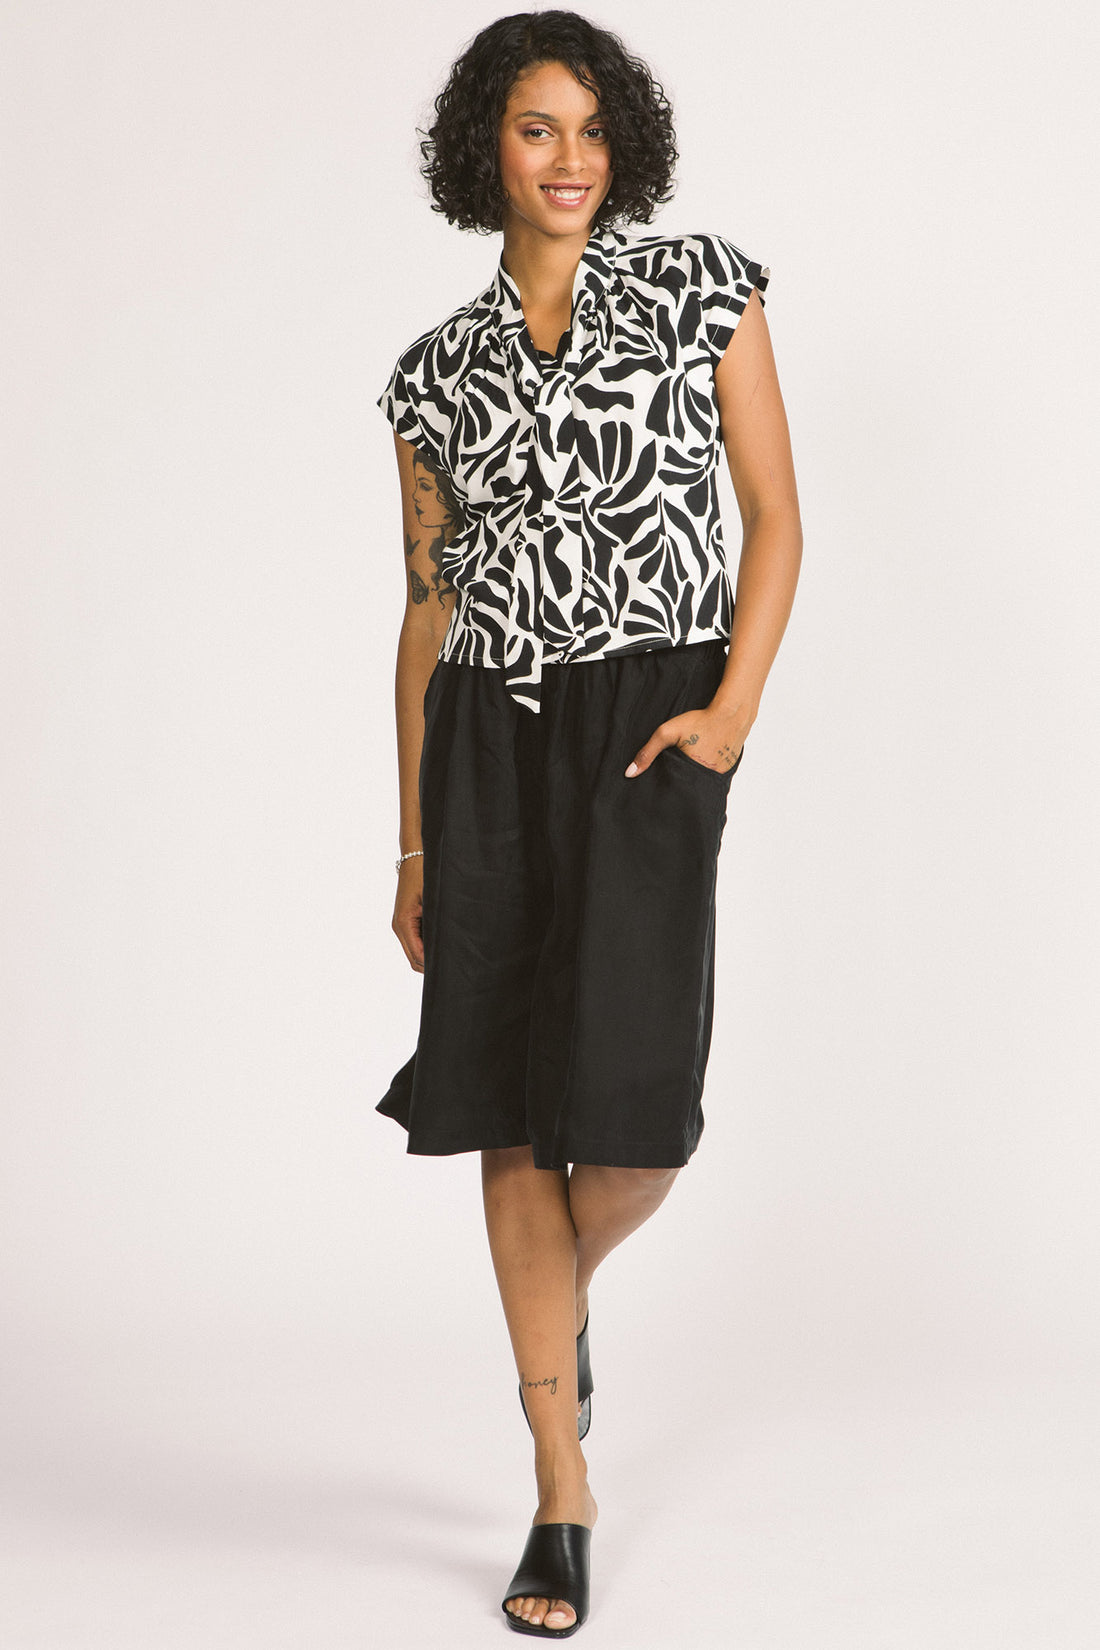 Isabeau Top by Allison Wonderland, Zebra Leaf, large bow, short raglan sleeves, eco-fabric, Lenzing Ecovero Viscose, sizes 2-12, made in Vancouver 